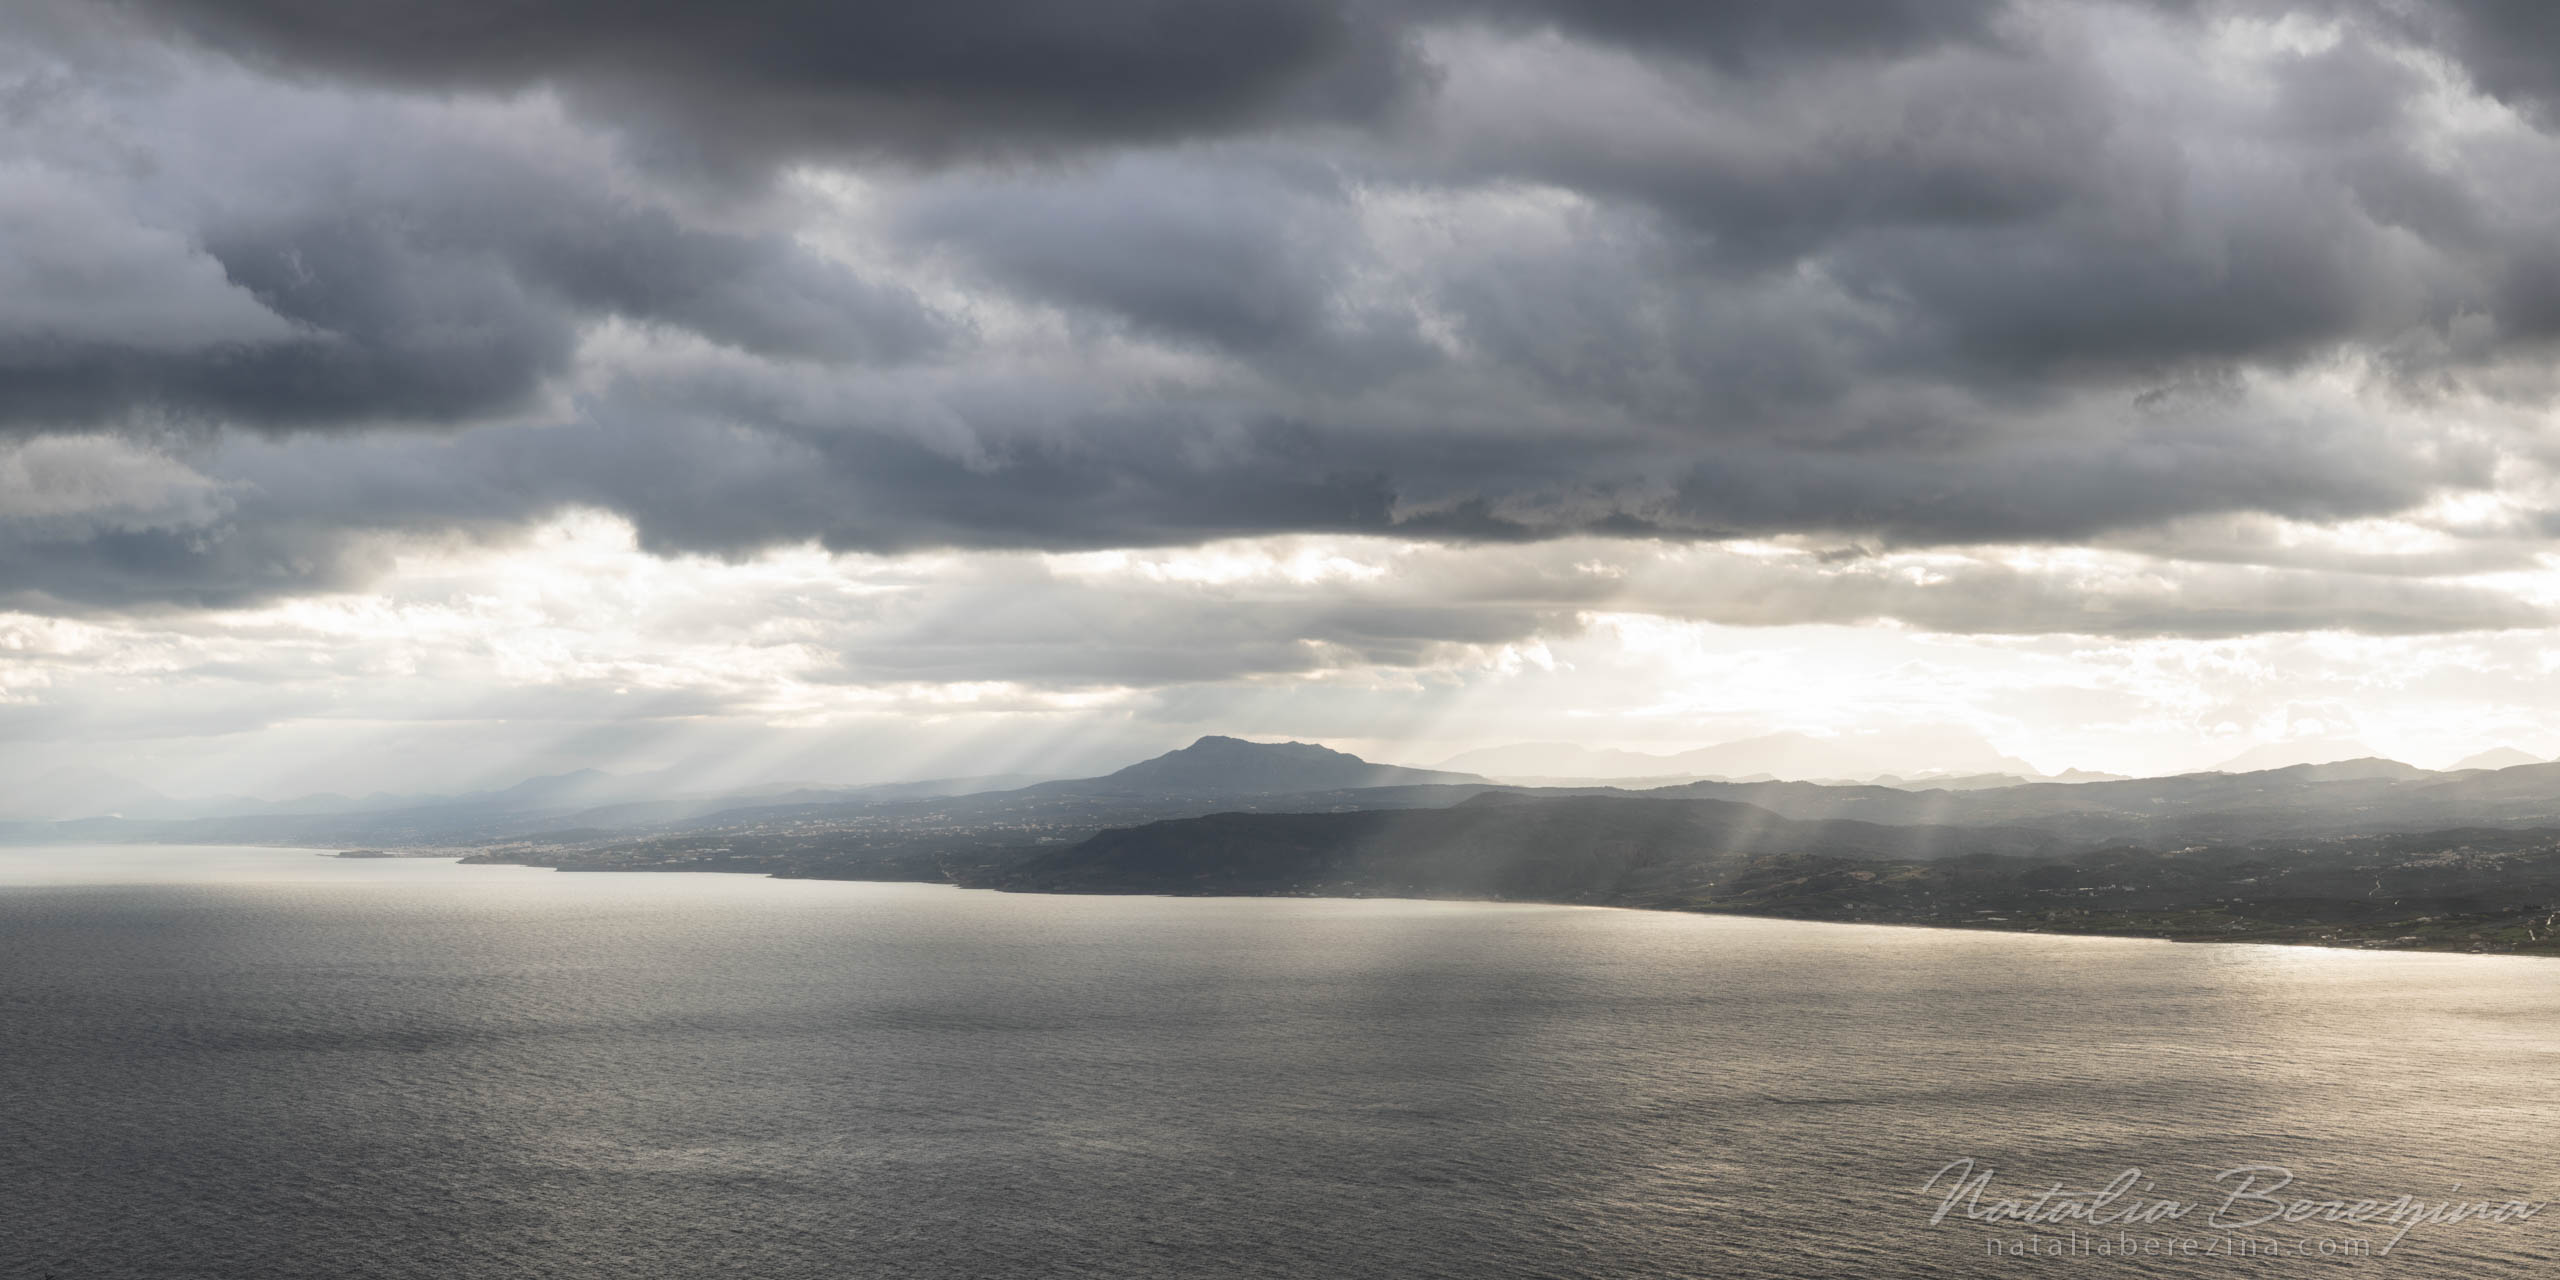 Greece, Crete, landscape, sea, cloud, sunlight, skyline, gold, gray, 2x1 CR1-NB0B4A9307-P - Crete, Greece - Natalia Berezina Photography